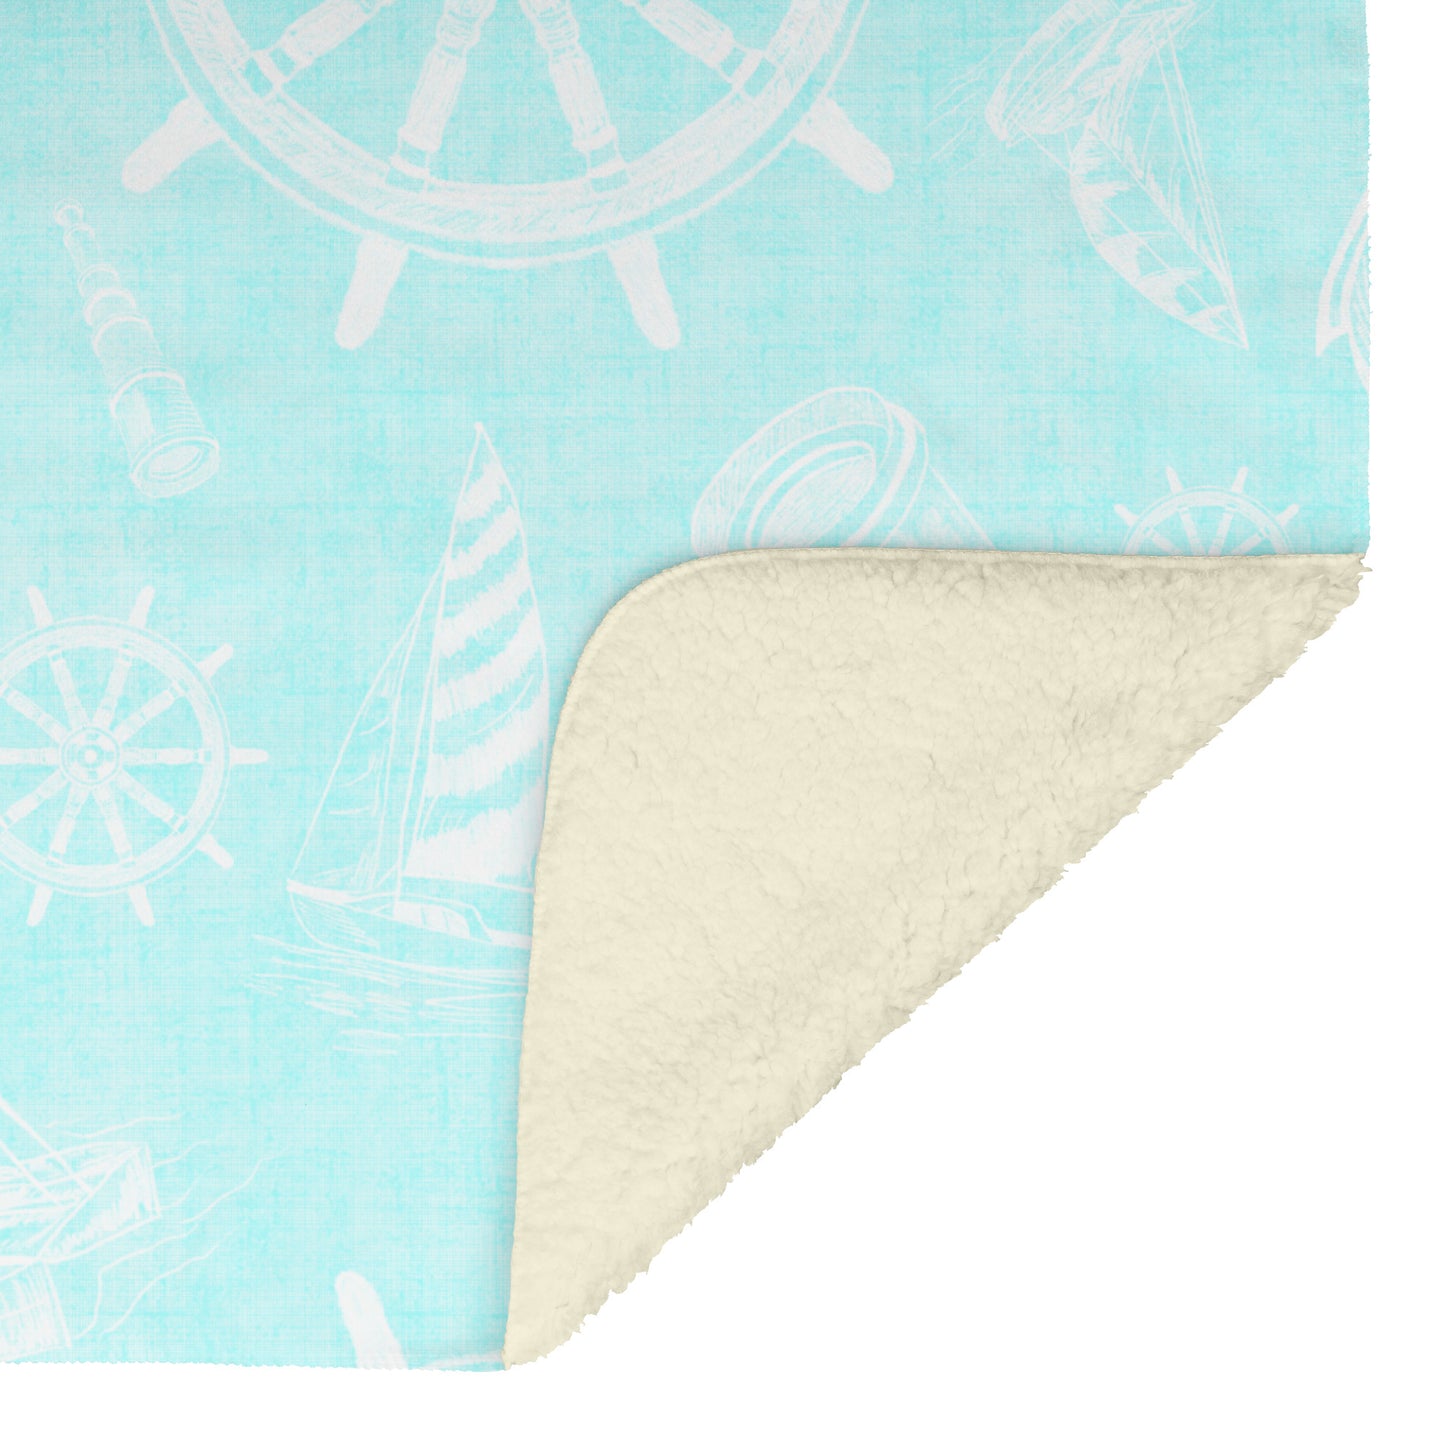 Nautical Sketches on Coastal Blue Linen Texture Background, Fleece Blanket